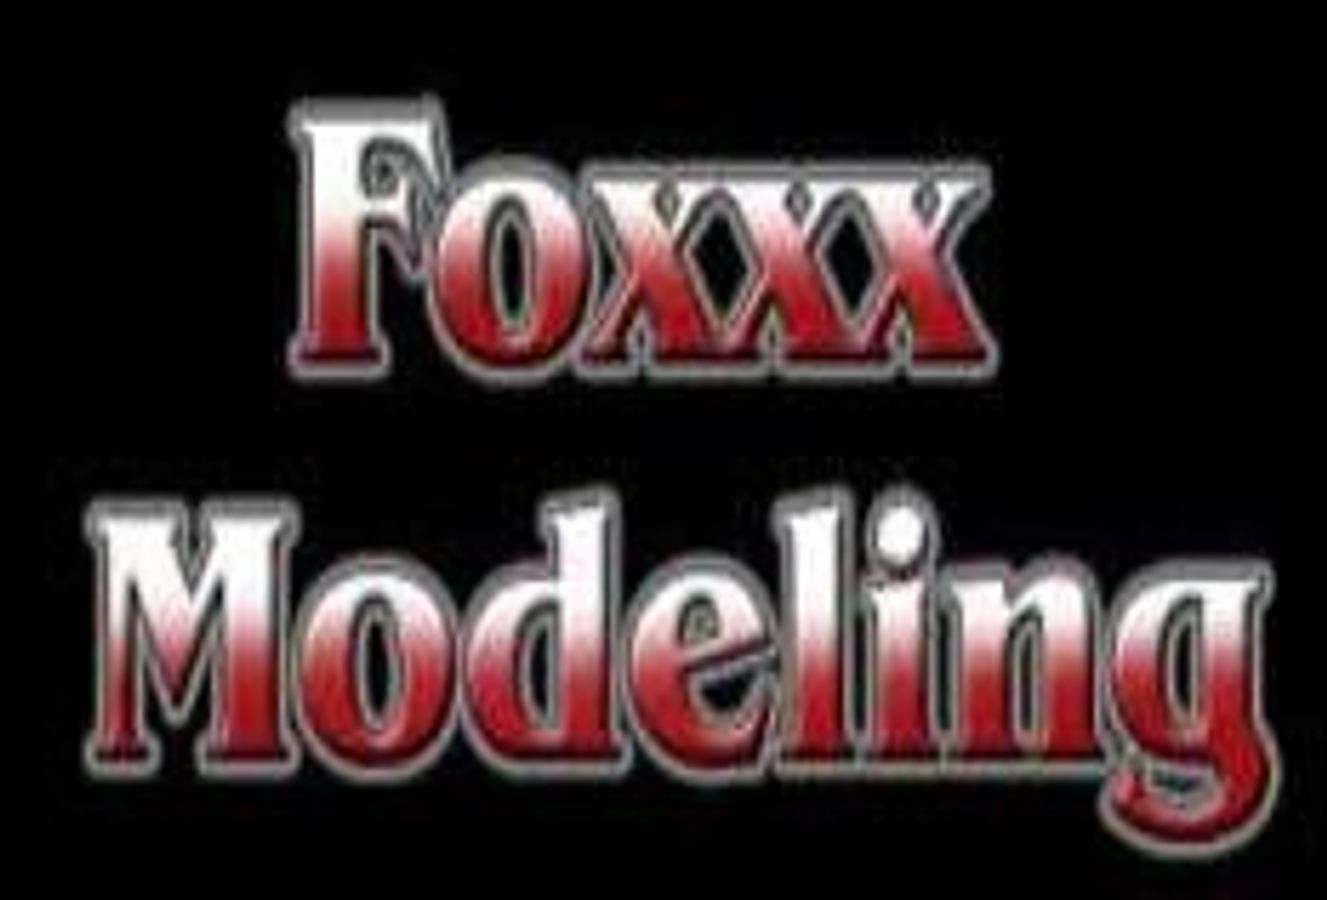 Foxxx Modeling